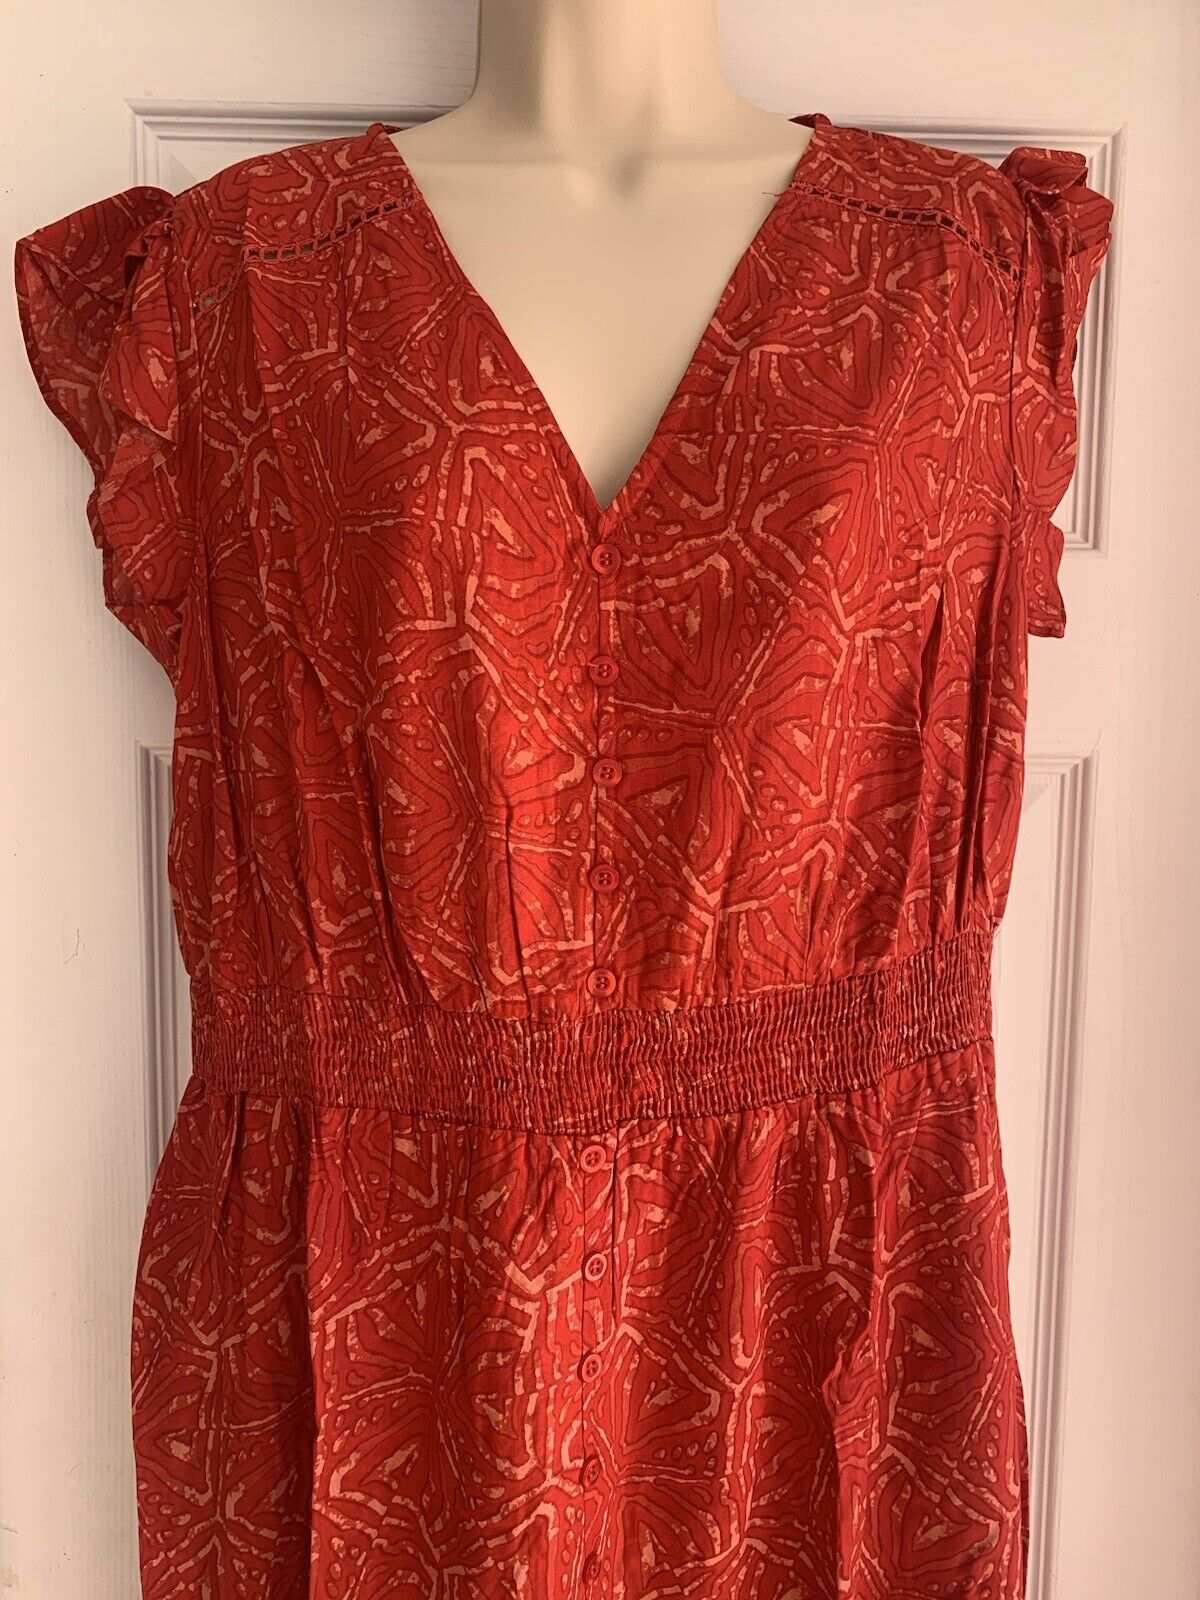 EX Joe Brown Red Printed Lace Maxi Dress 16 18 20 22 24 26 28 30 32 RRP £65